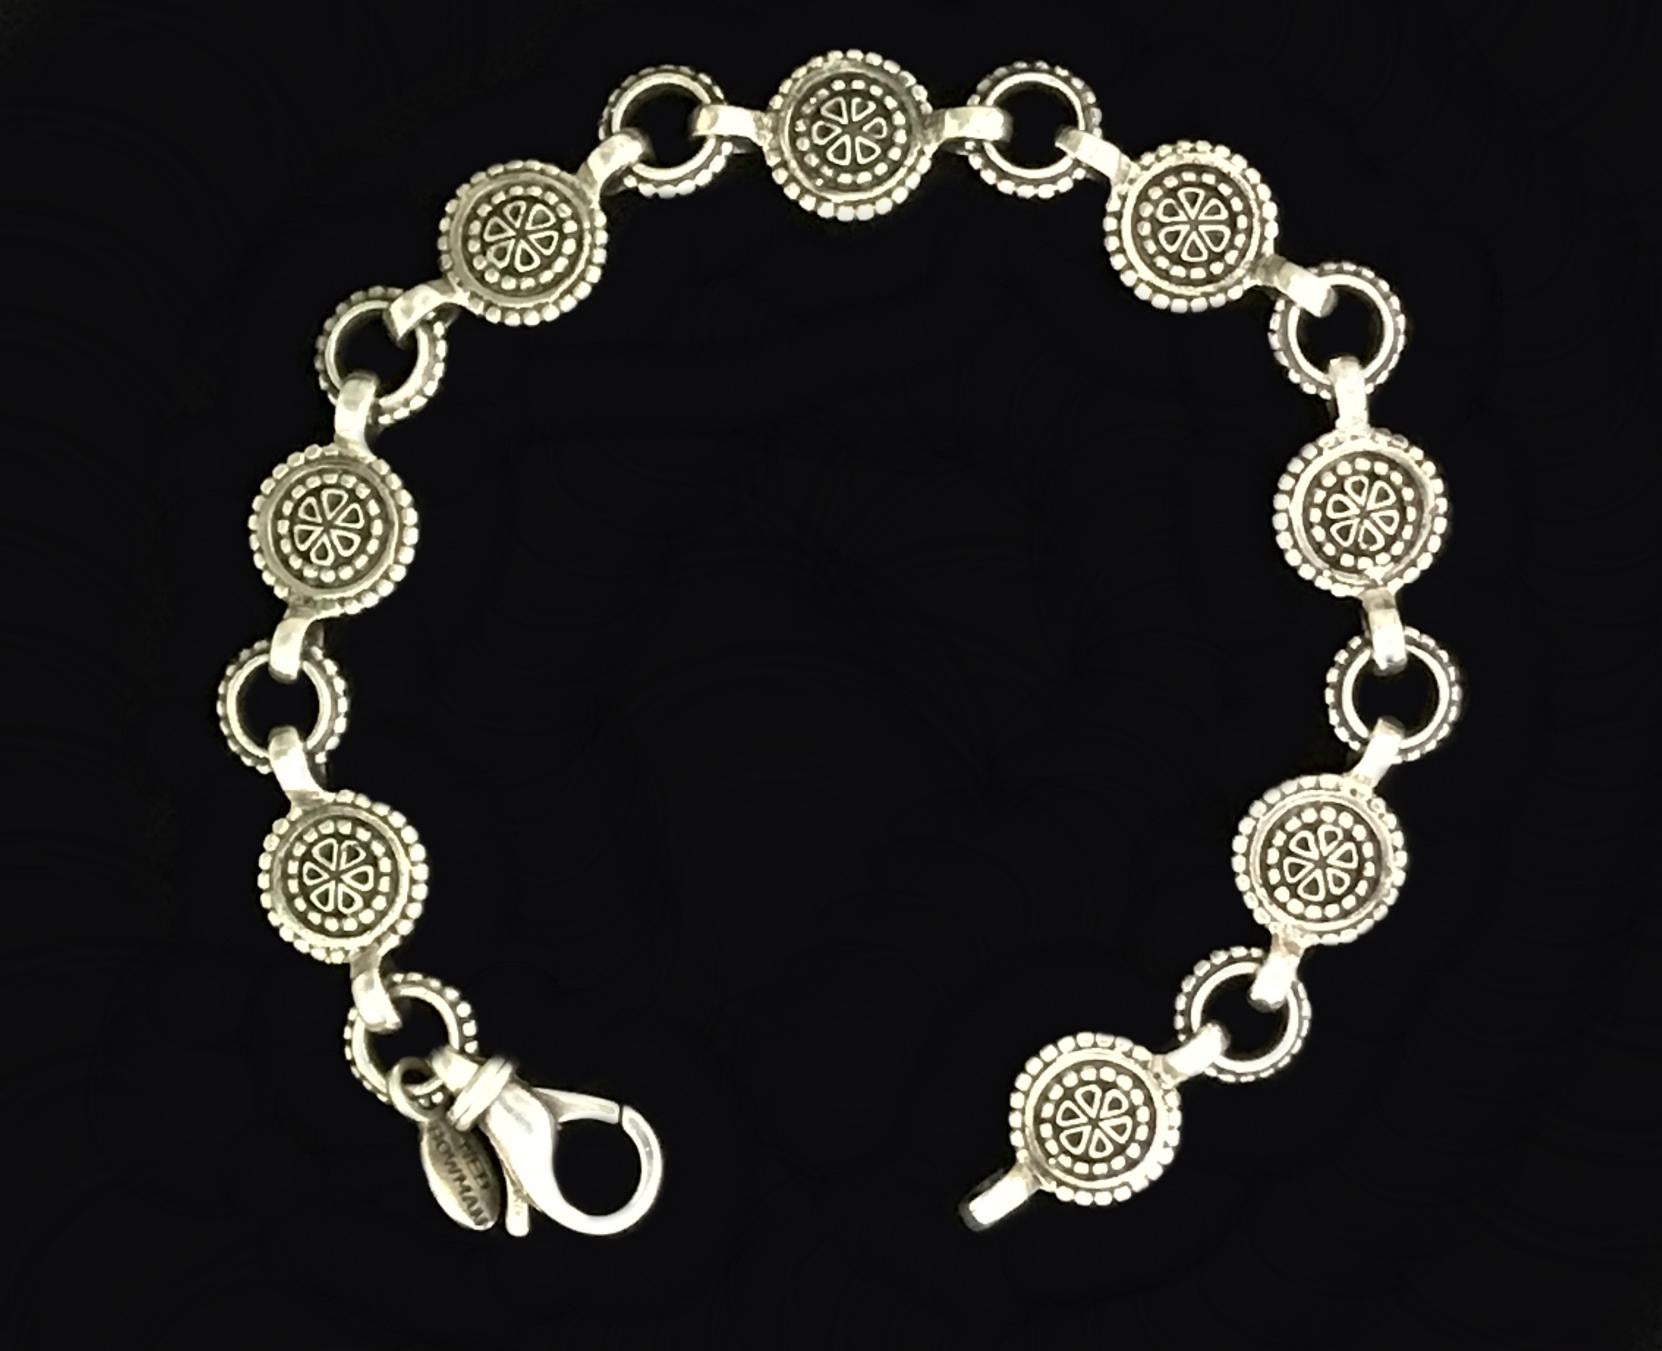 Handmade sterling silver link  bracelet featuring a Fleur de Lis motif fastened with a 